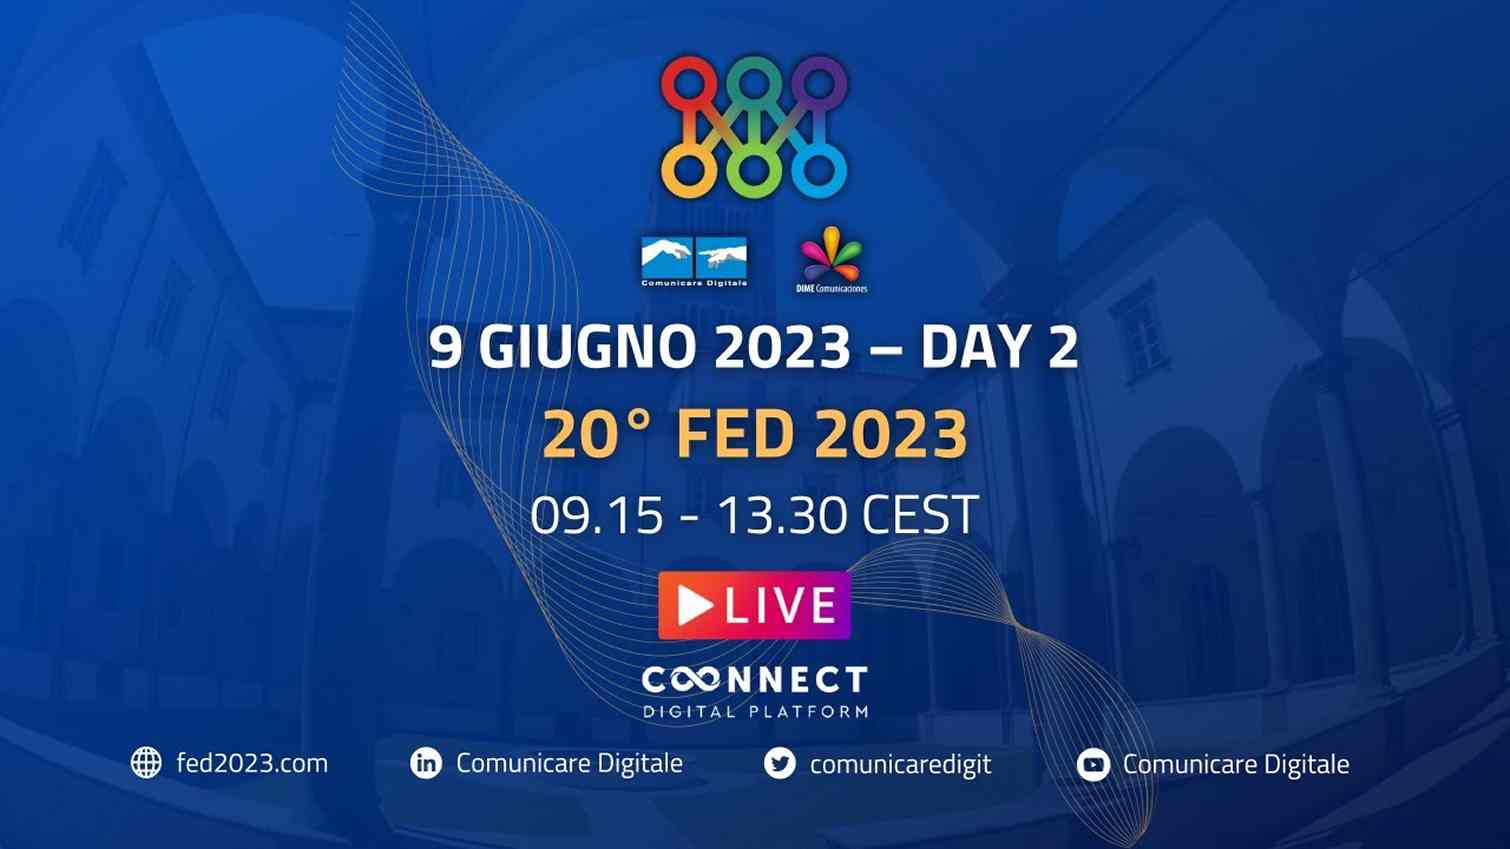 20 Forum Europeo Digitale, Lucca 2023 #2, diretta streaming Digital-News.it - 9 Giugno | #FED2023